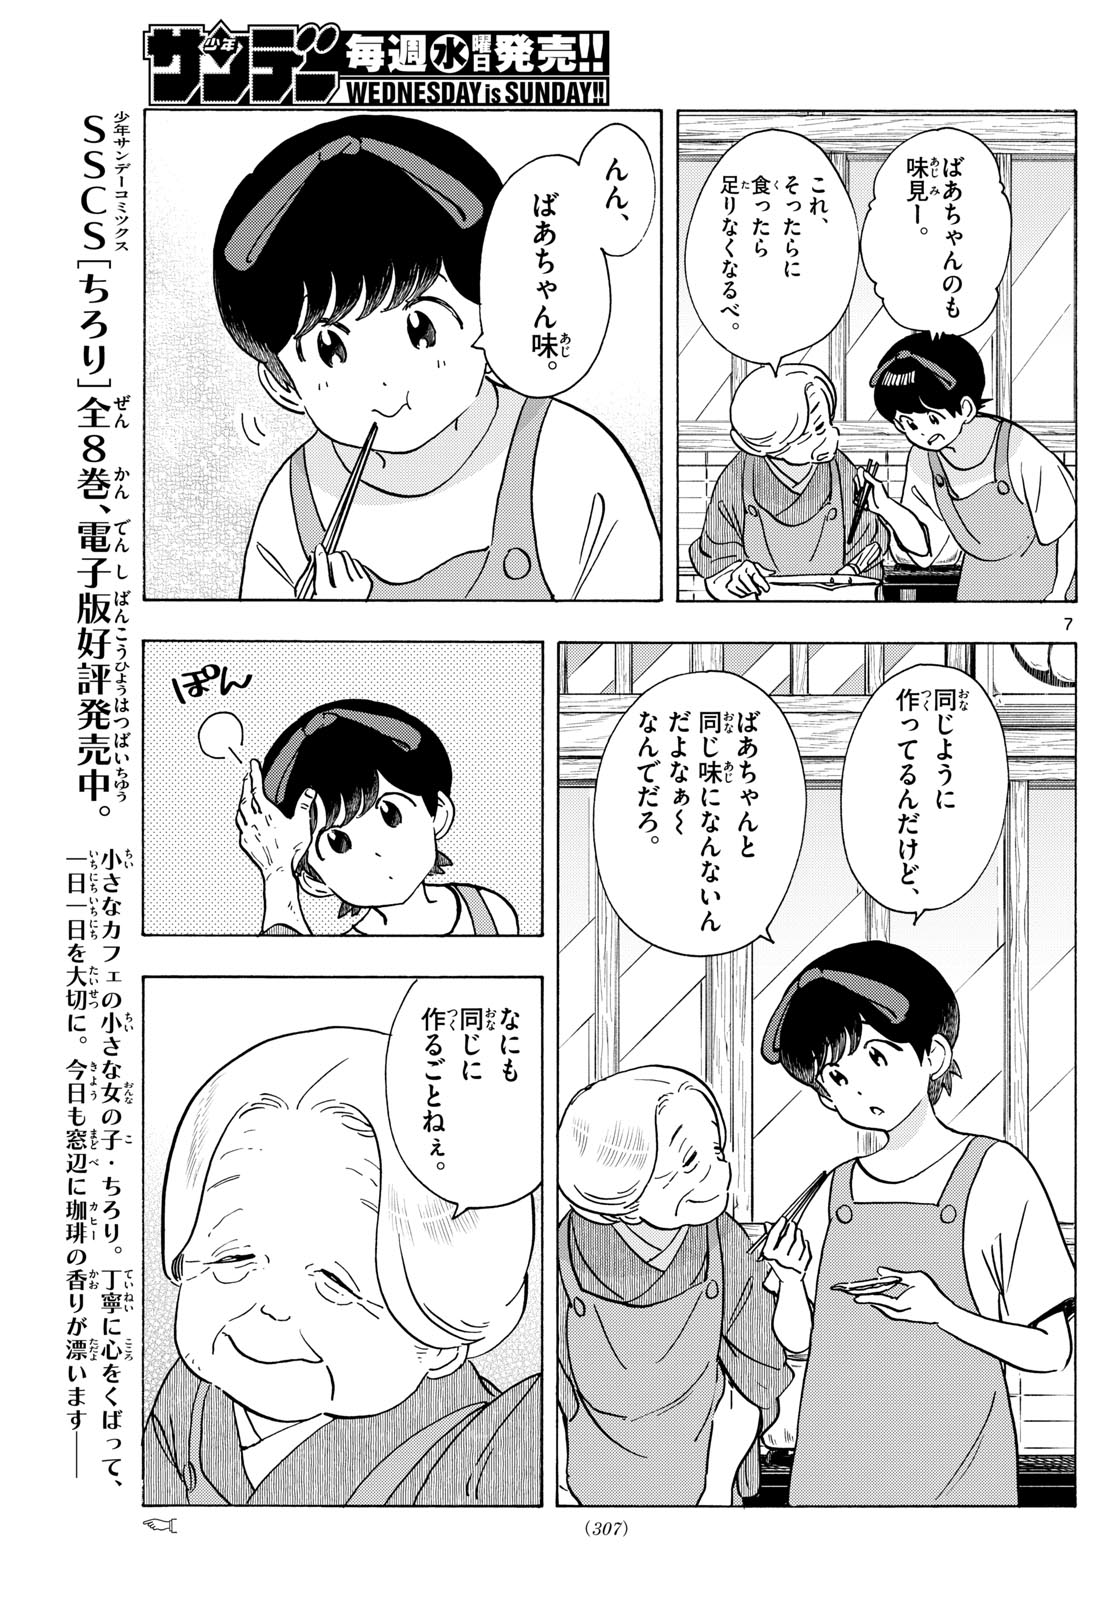 Maiko-san Chi no Makanai-san - Chapter 304 - Page 7